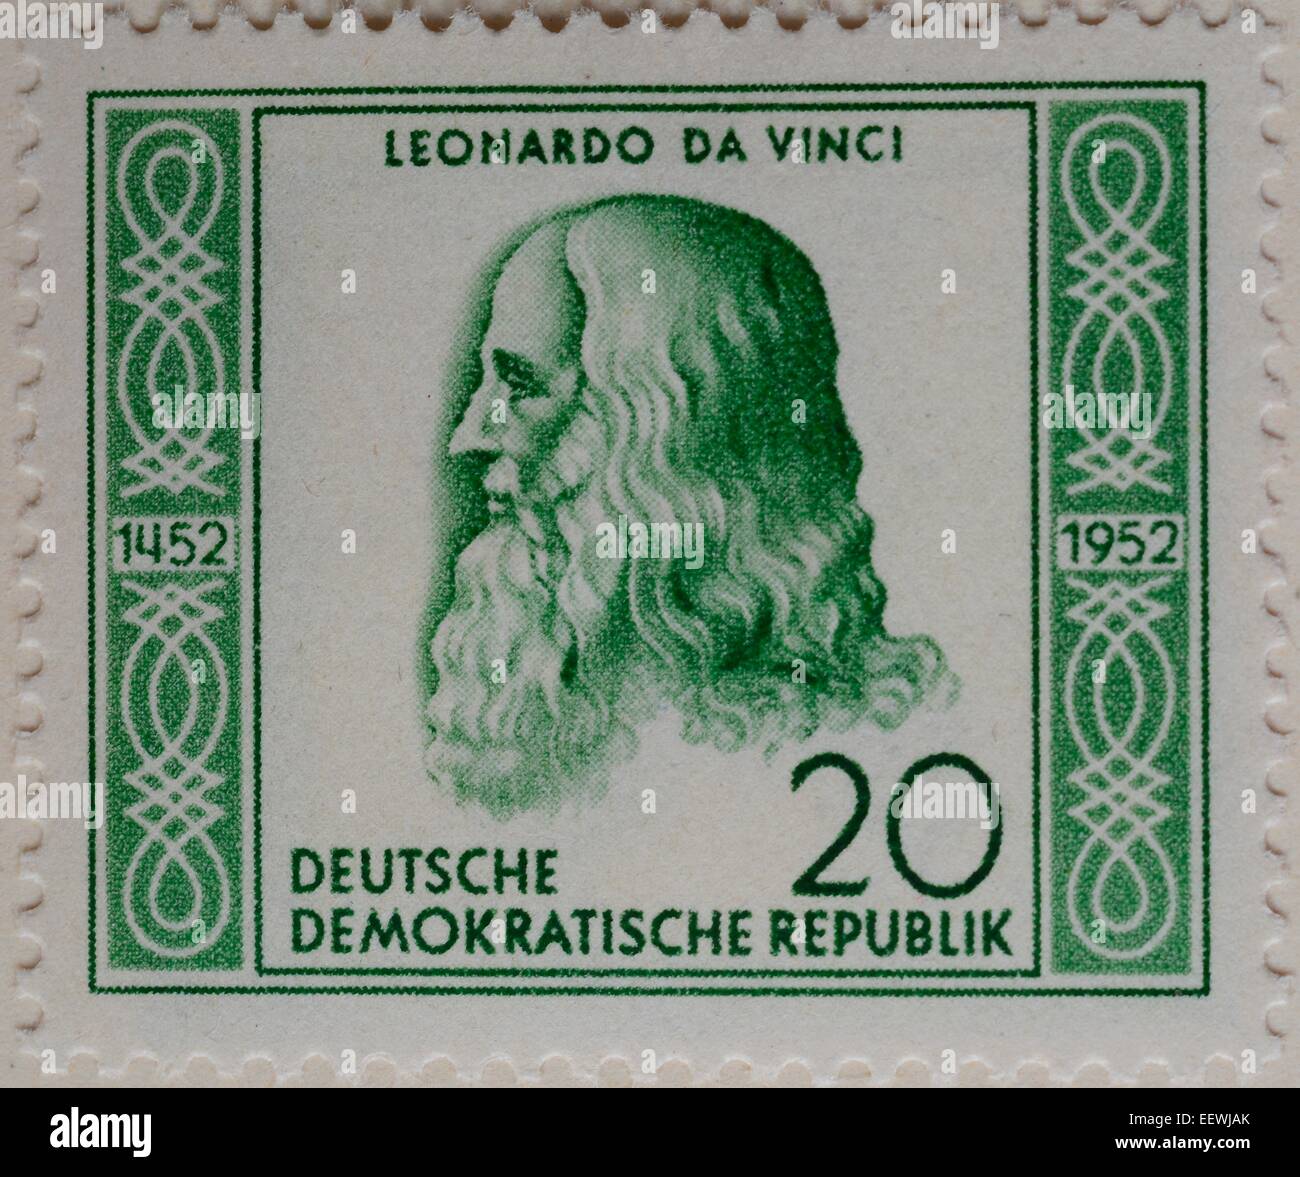 Leonardo da Vinci, artist and intellectual of the Italian Renaissance, portrait on a German stamp, GDR, 1952 Stock Photo